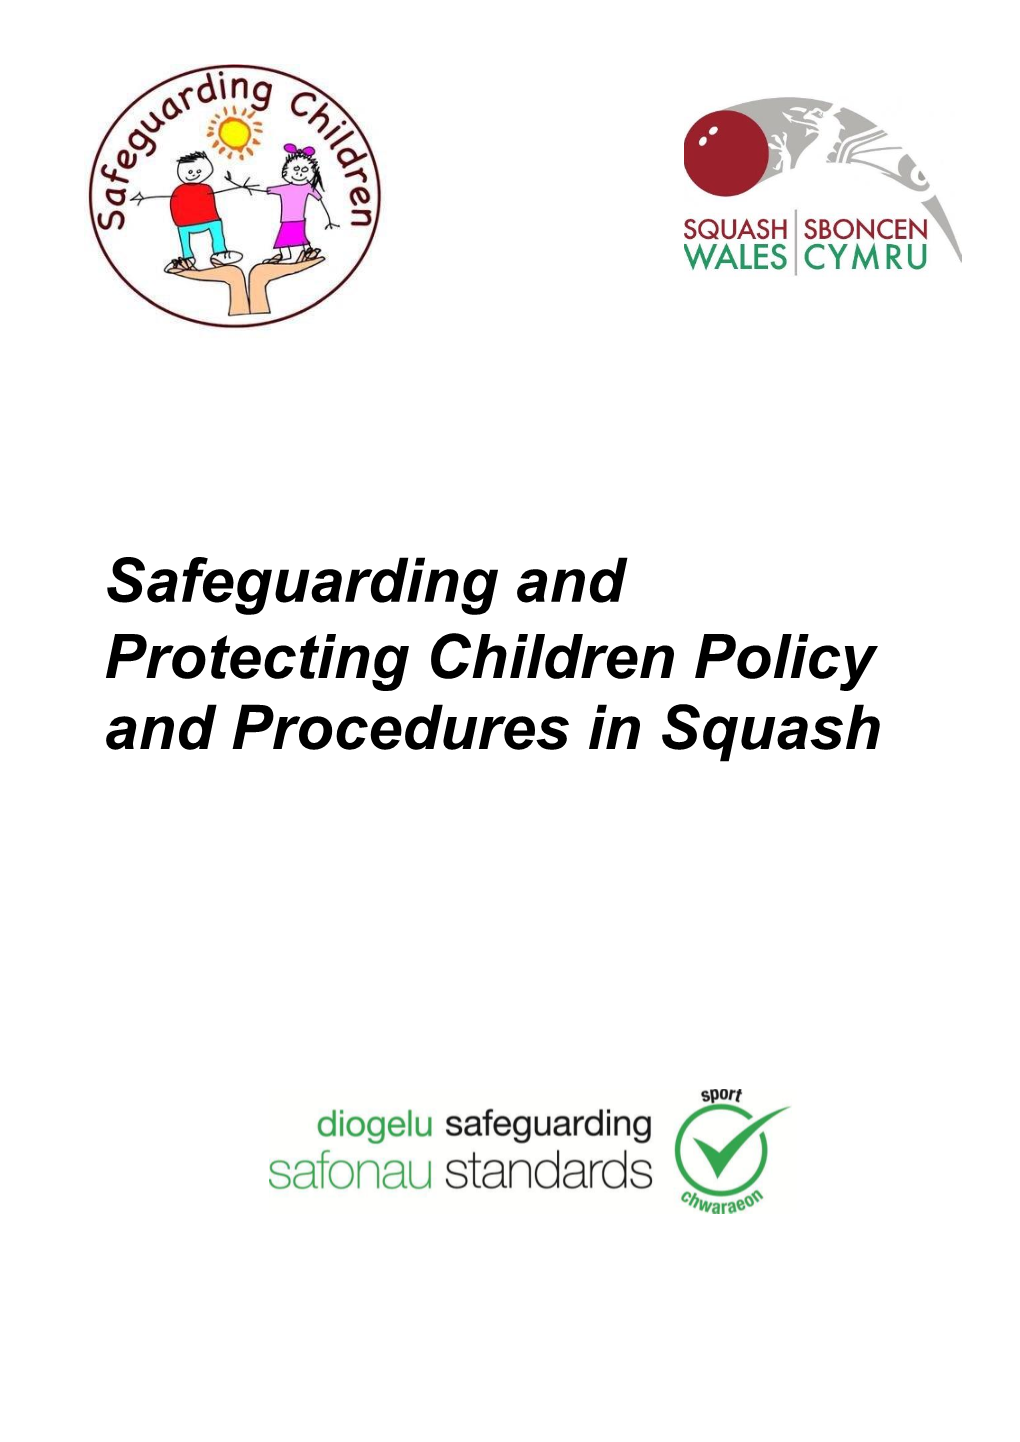 Safeguarding Policy & Procedure